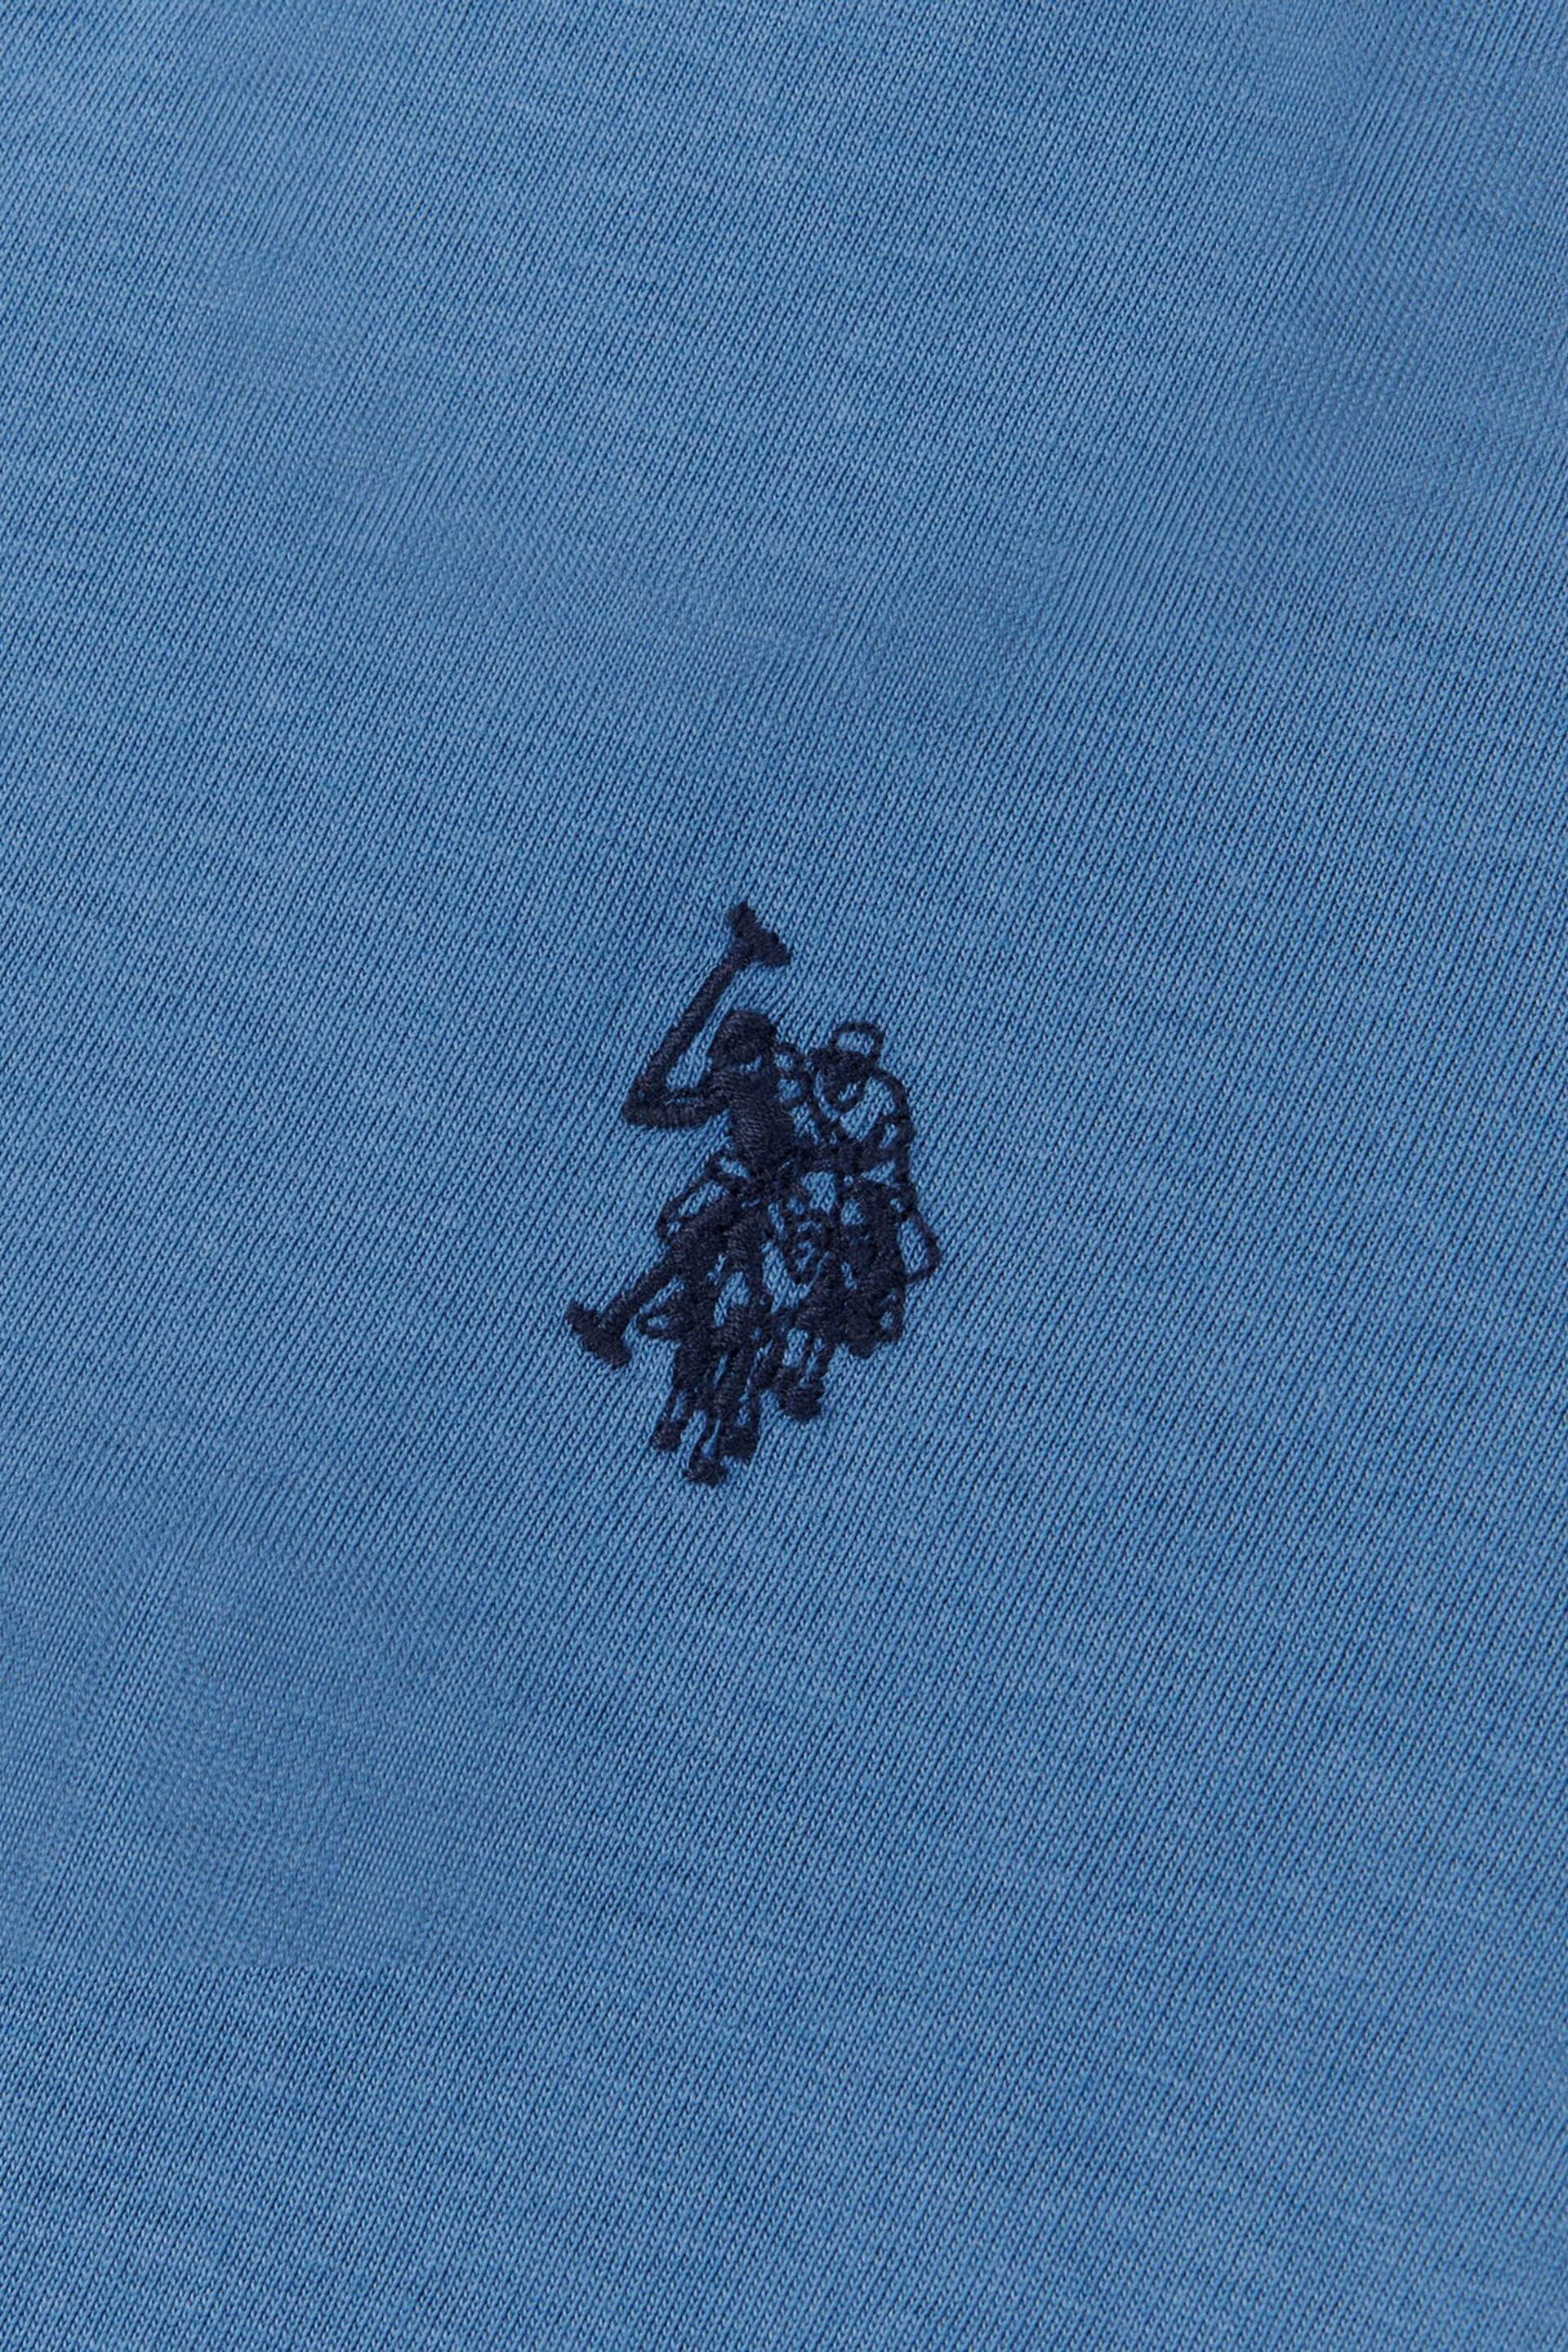 U.S. Polo Assn. Boys Blue Double Horsemen T-Shirt - Image 7 of 7